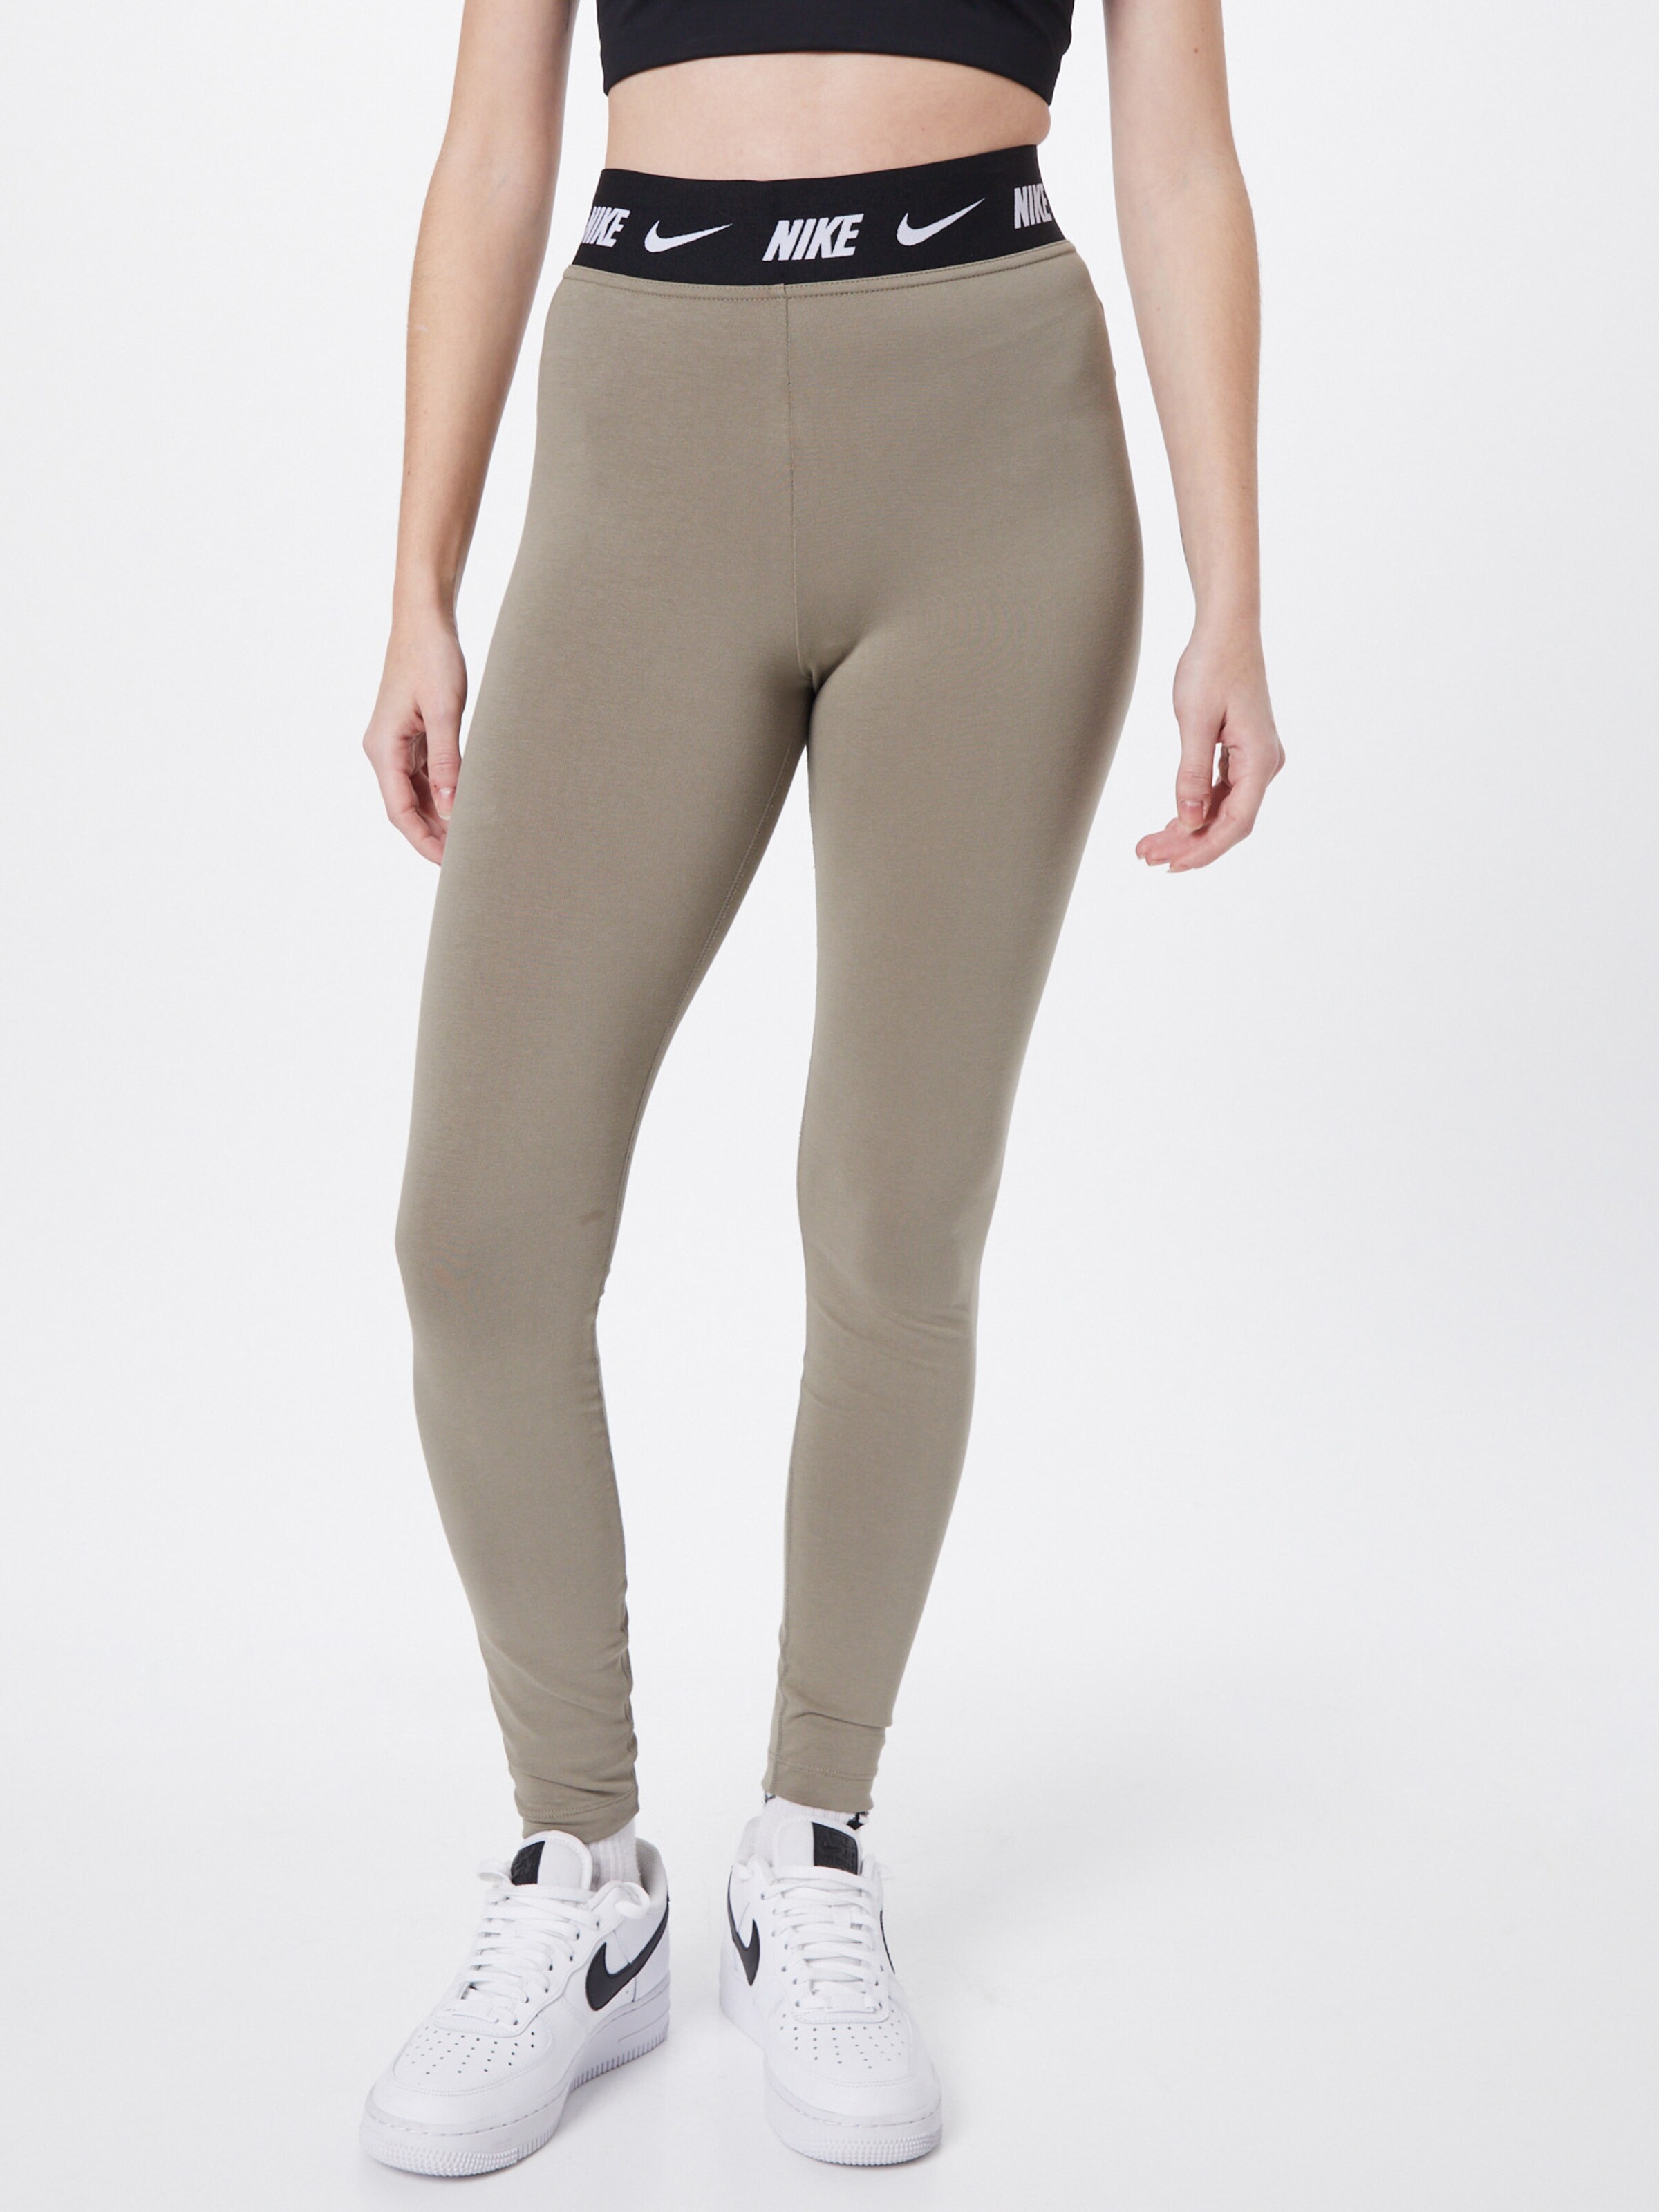 Frauen Hosen Nike Sportswear Leggings in Khaki - QE95755